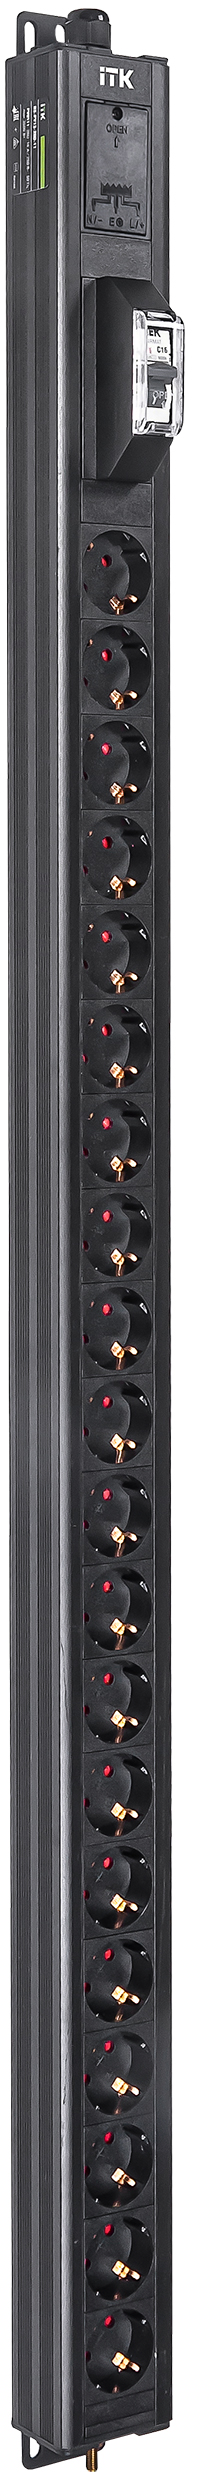 ITK BASE PDU вертикальный PV0111 26U 1 фаза 16А 20 розеток SCHUKO (немецкий стандарт) кабель 2,6м вилка SCHUKO (немецкий стандарт)